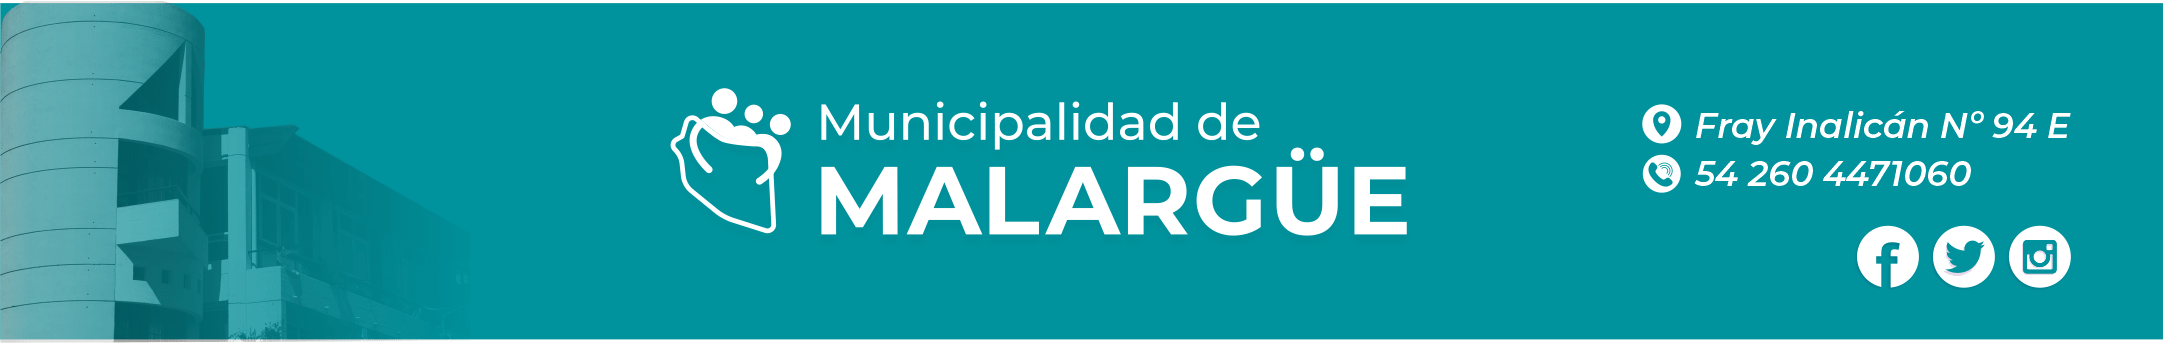 Municipalidad de Malargüe